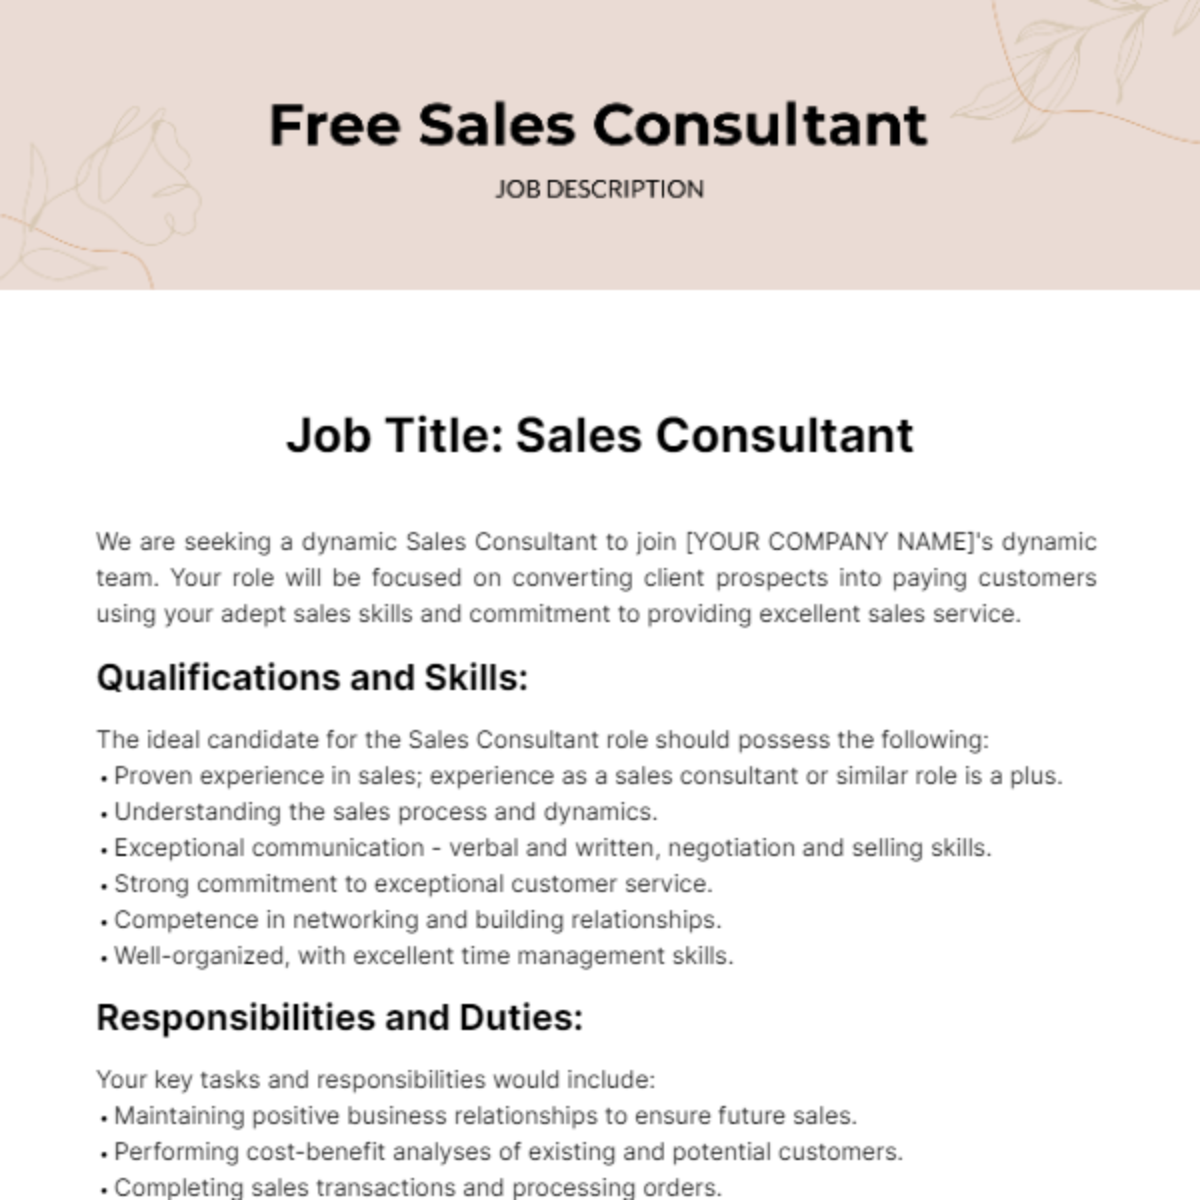 Free Sales Consultant Job Description Template